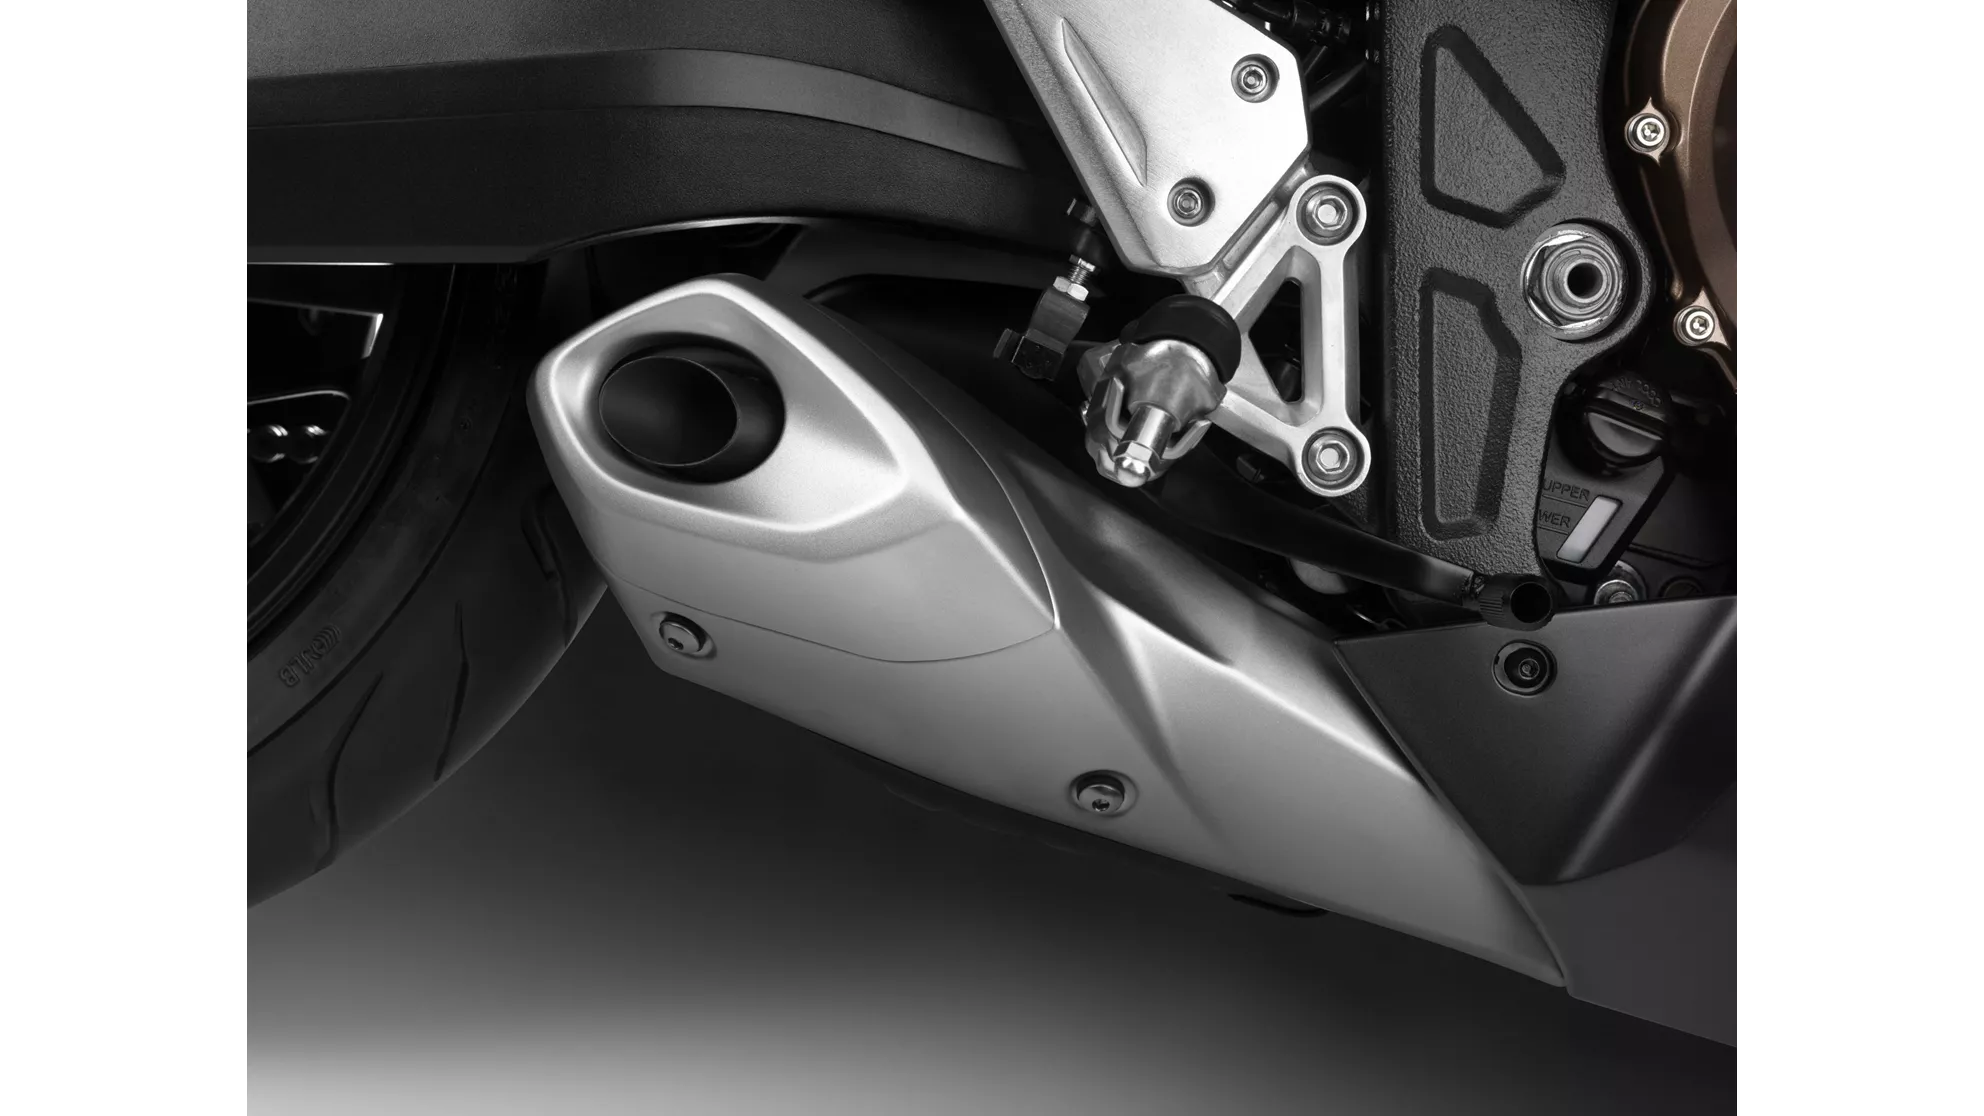 Honda CB650F - Resim 5